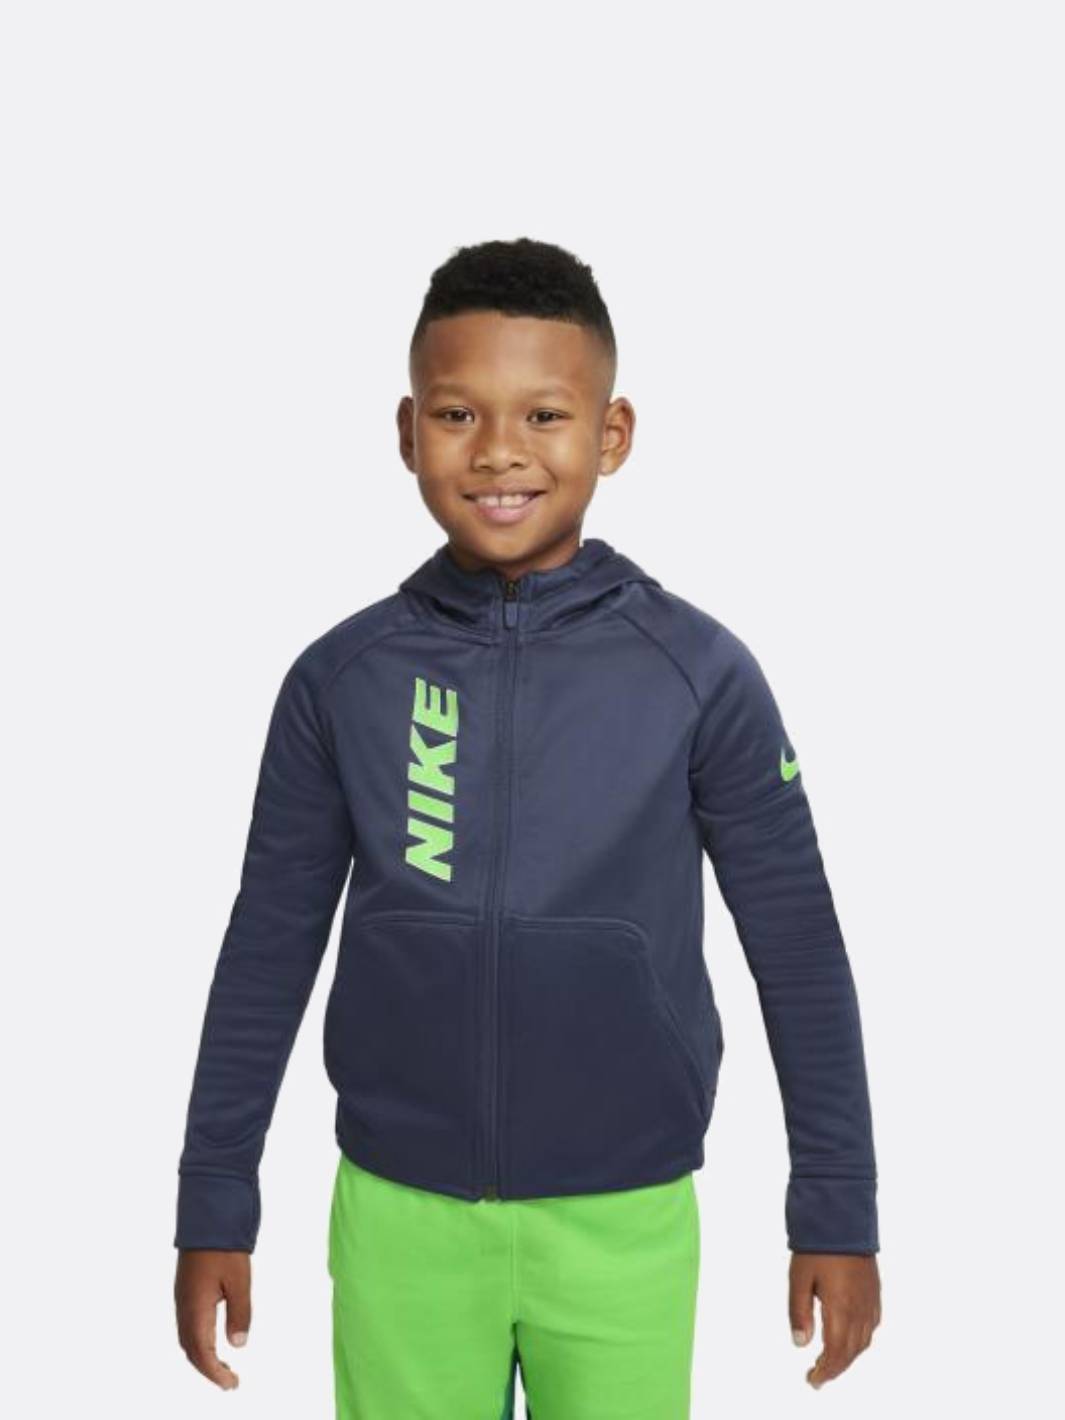 Nike Boy - Therma Fit Full-Zip - Thunder Blue/White - Nohble